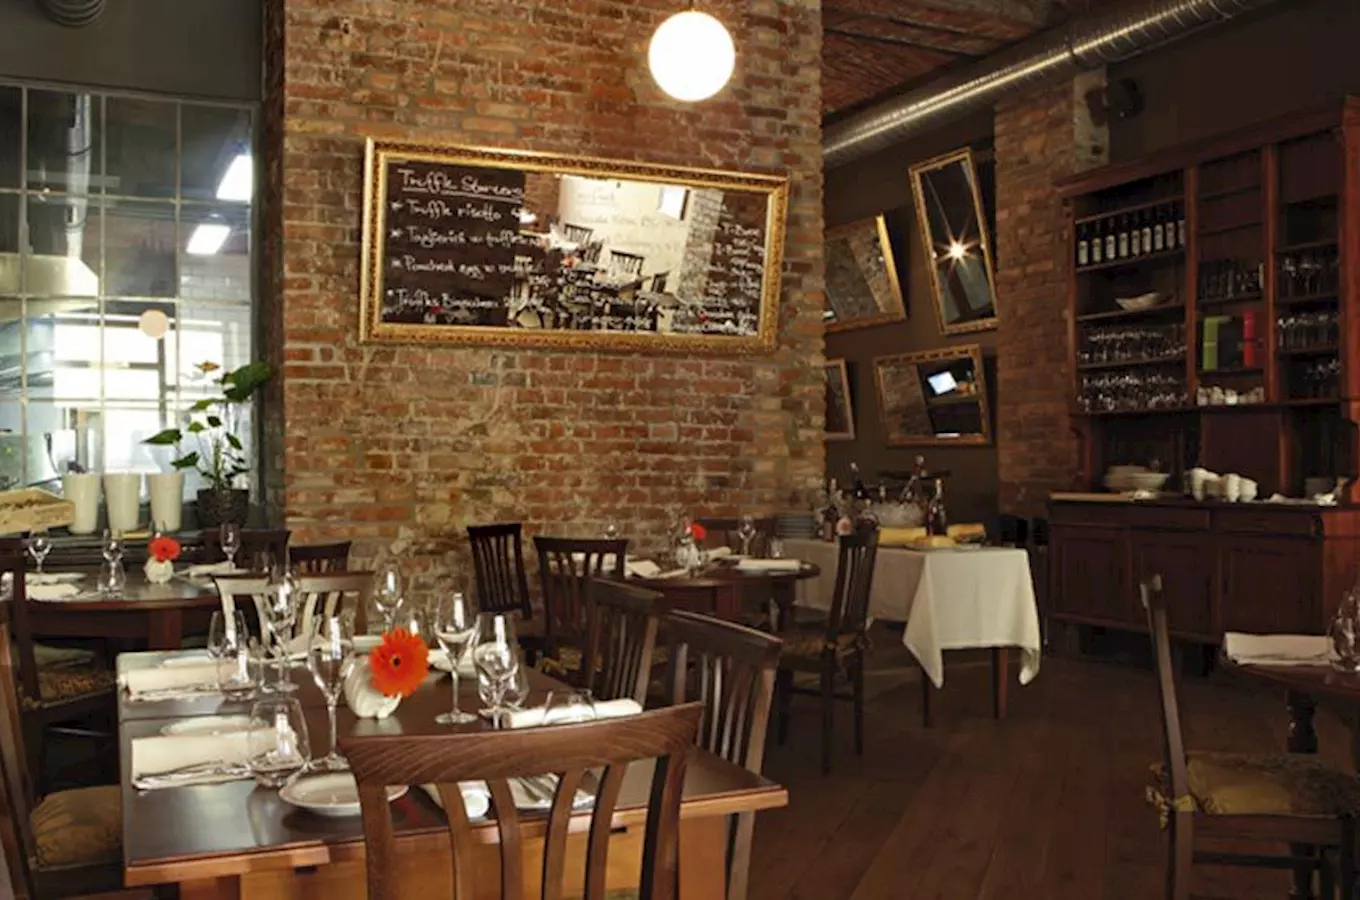 La Finestra In Cucina – restaurace v samotném centru Prahy